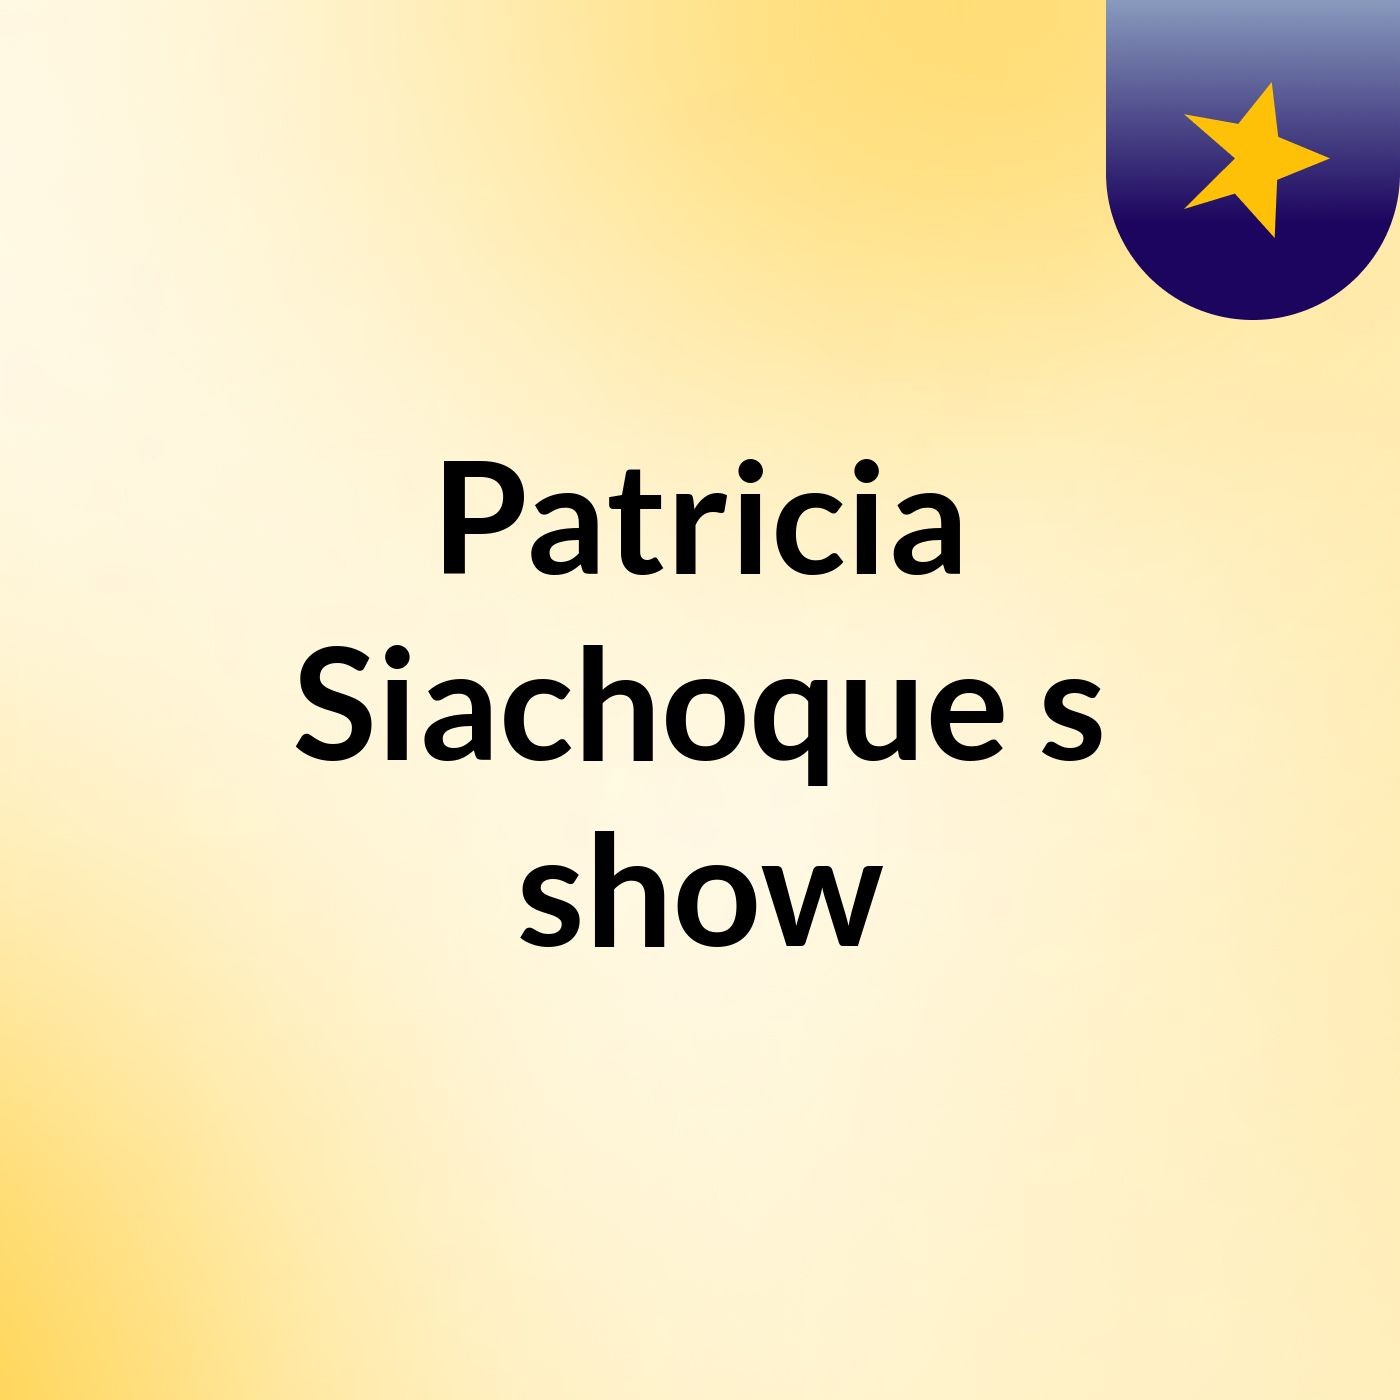 Patricia Siachoque's show